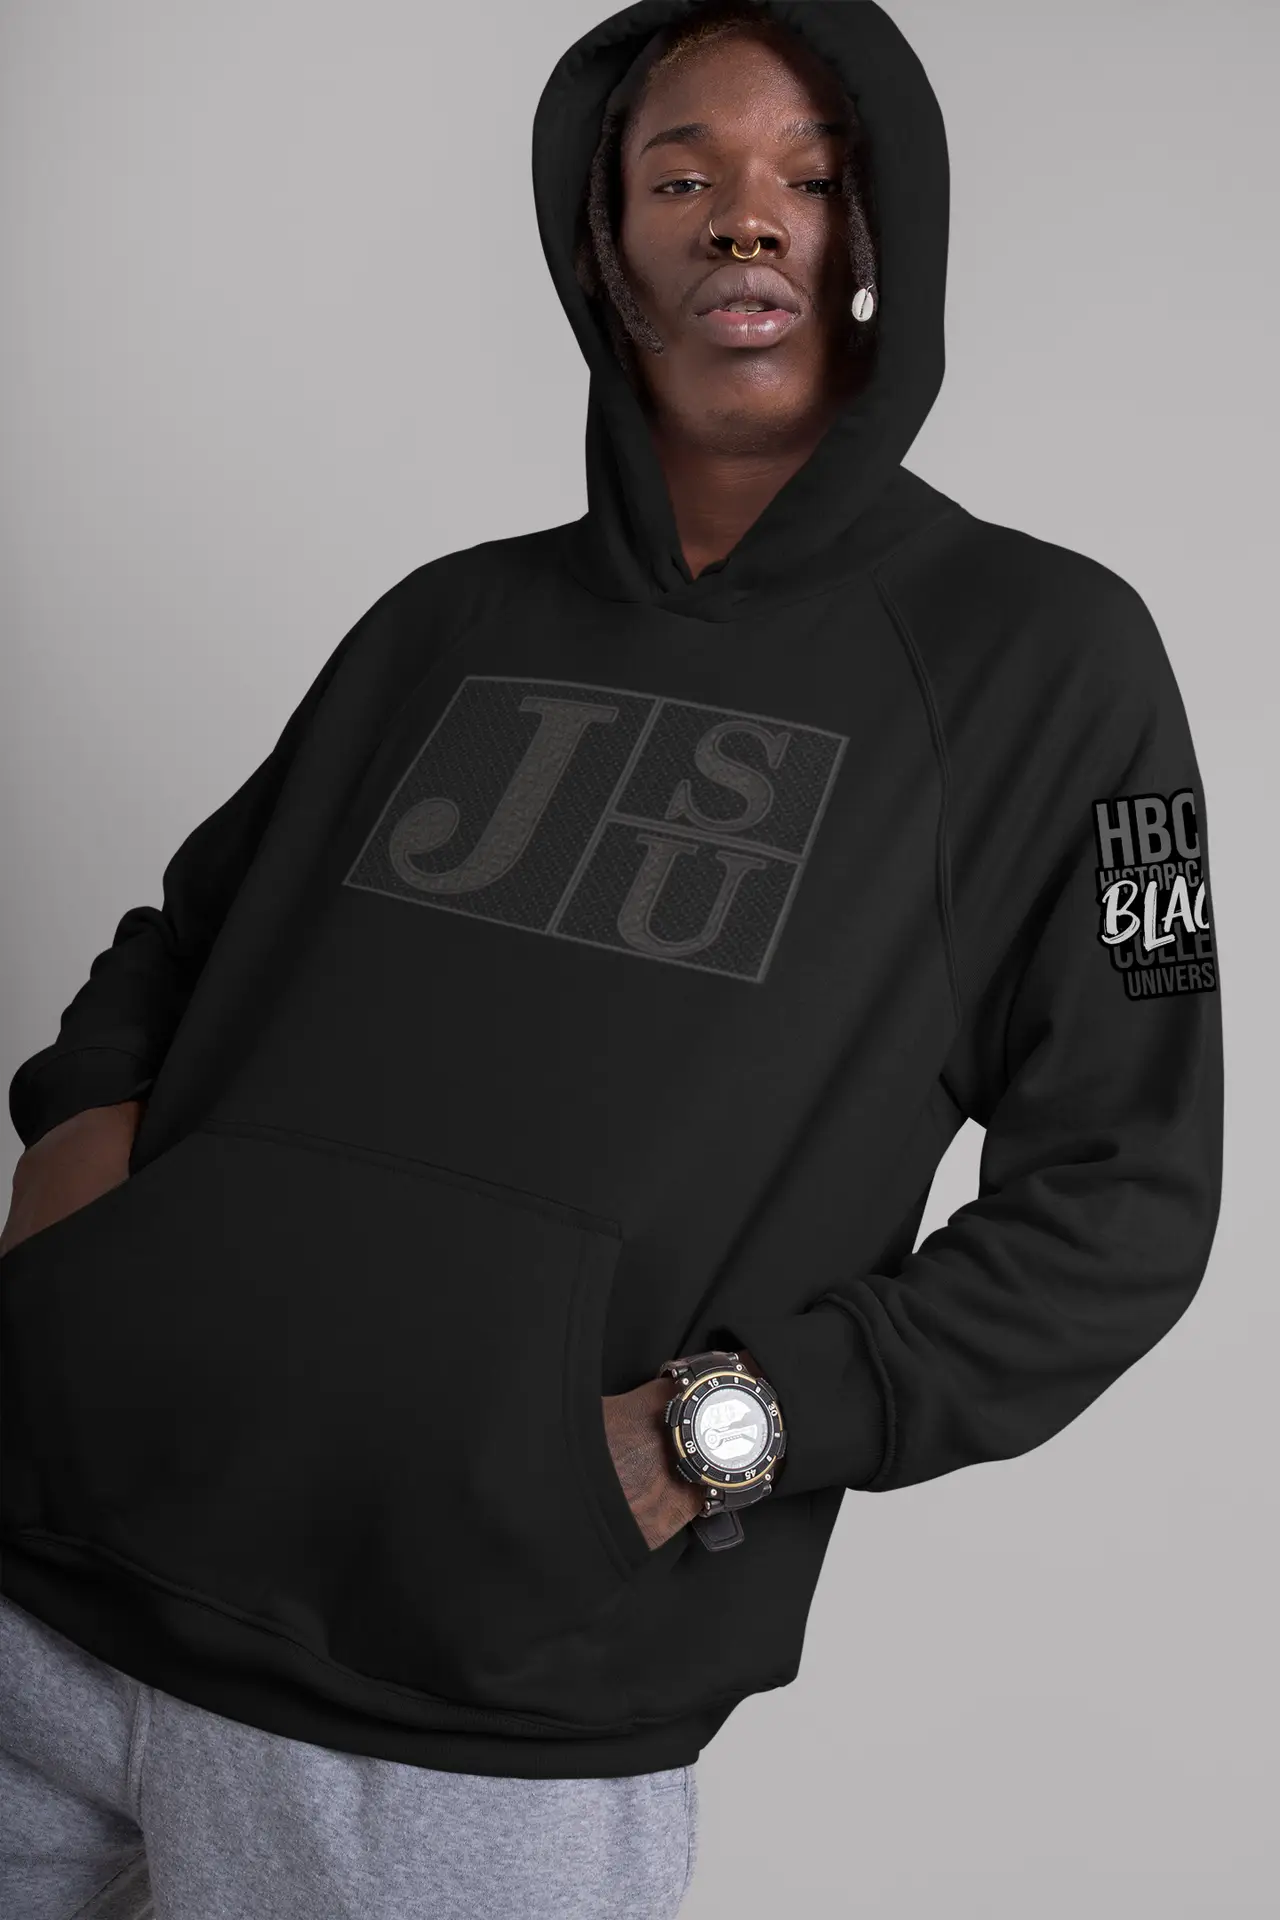 Young man wearing a black-on-black JSU HBCU hoodie